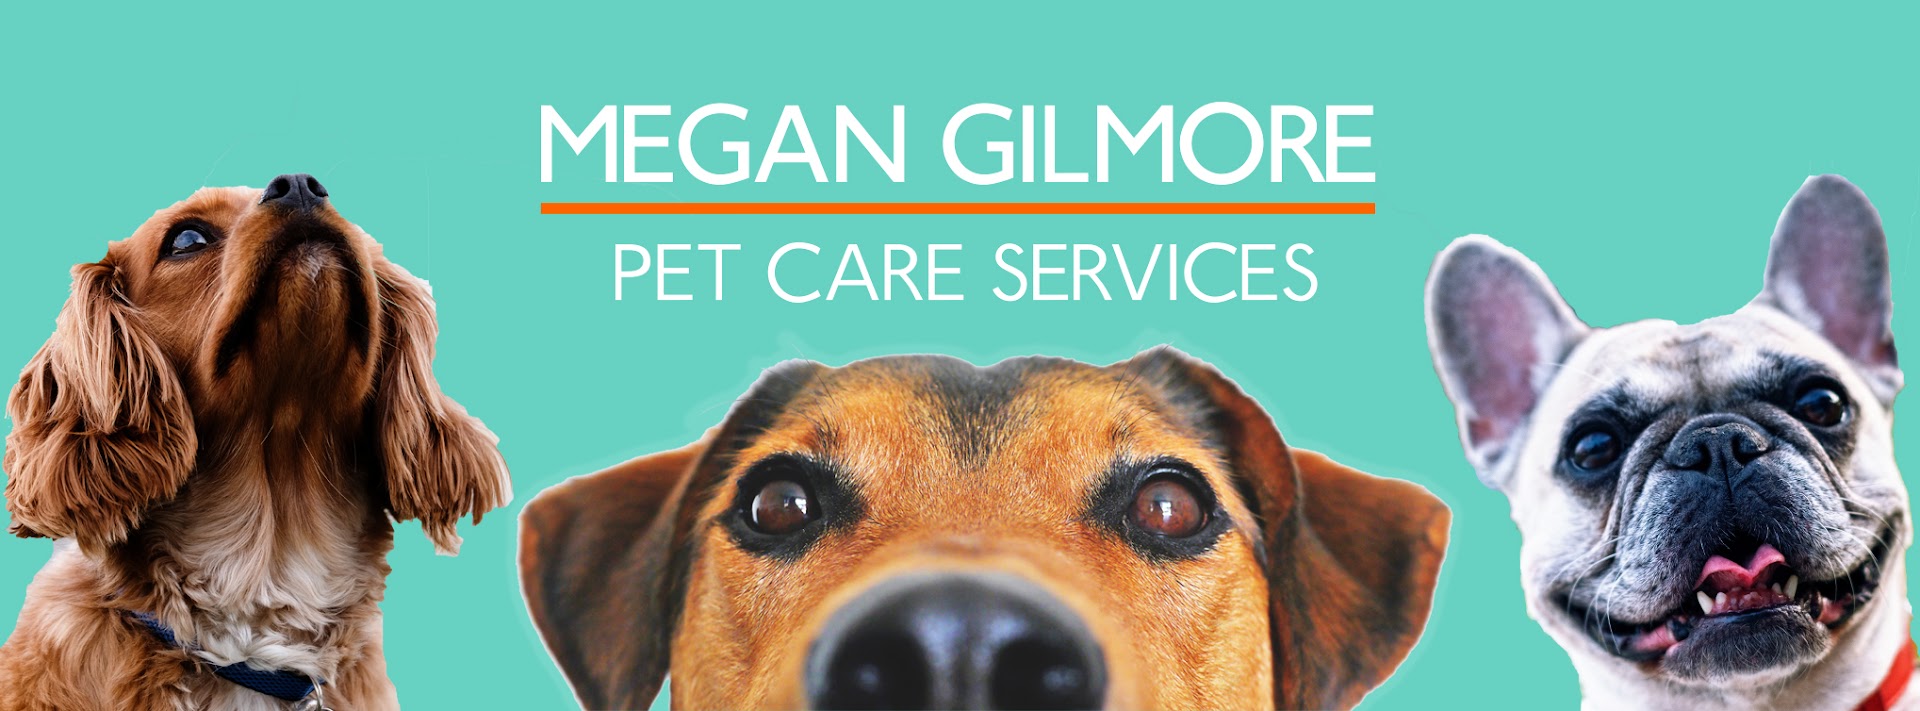 Megan Gilmore Pet Services